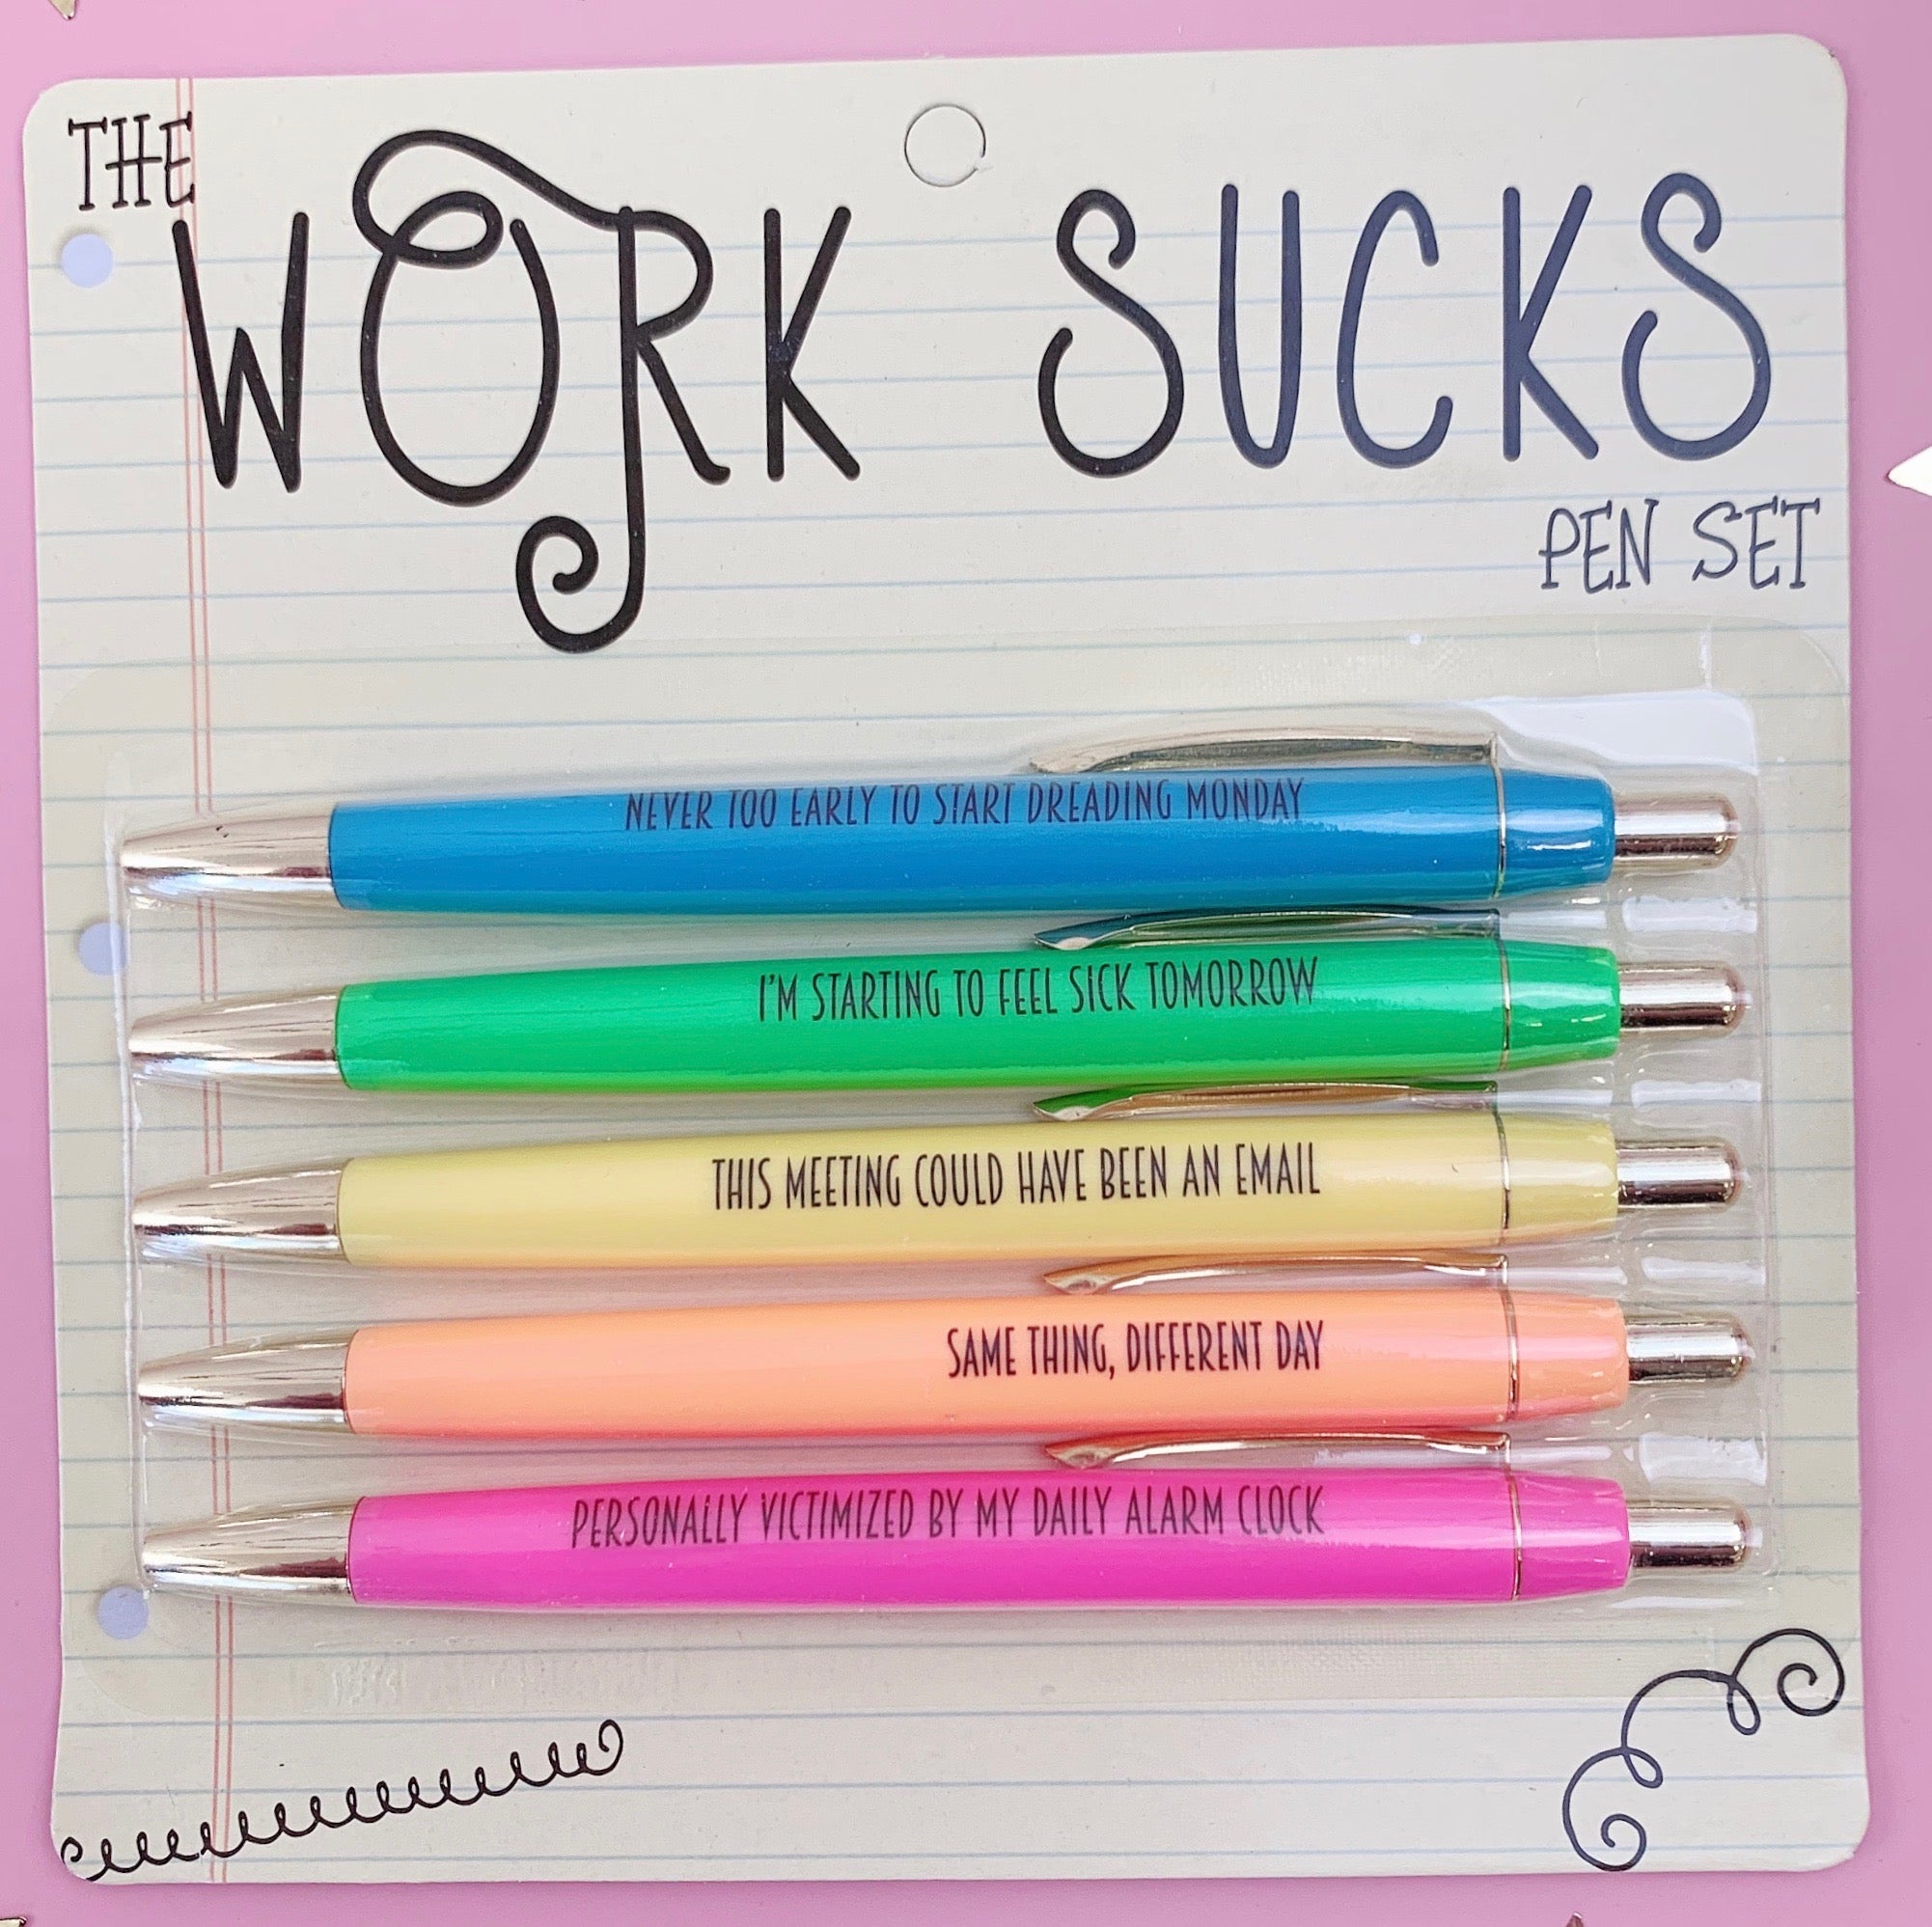 Profanity Office pens: set of 5 – Wild Rose Studio